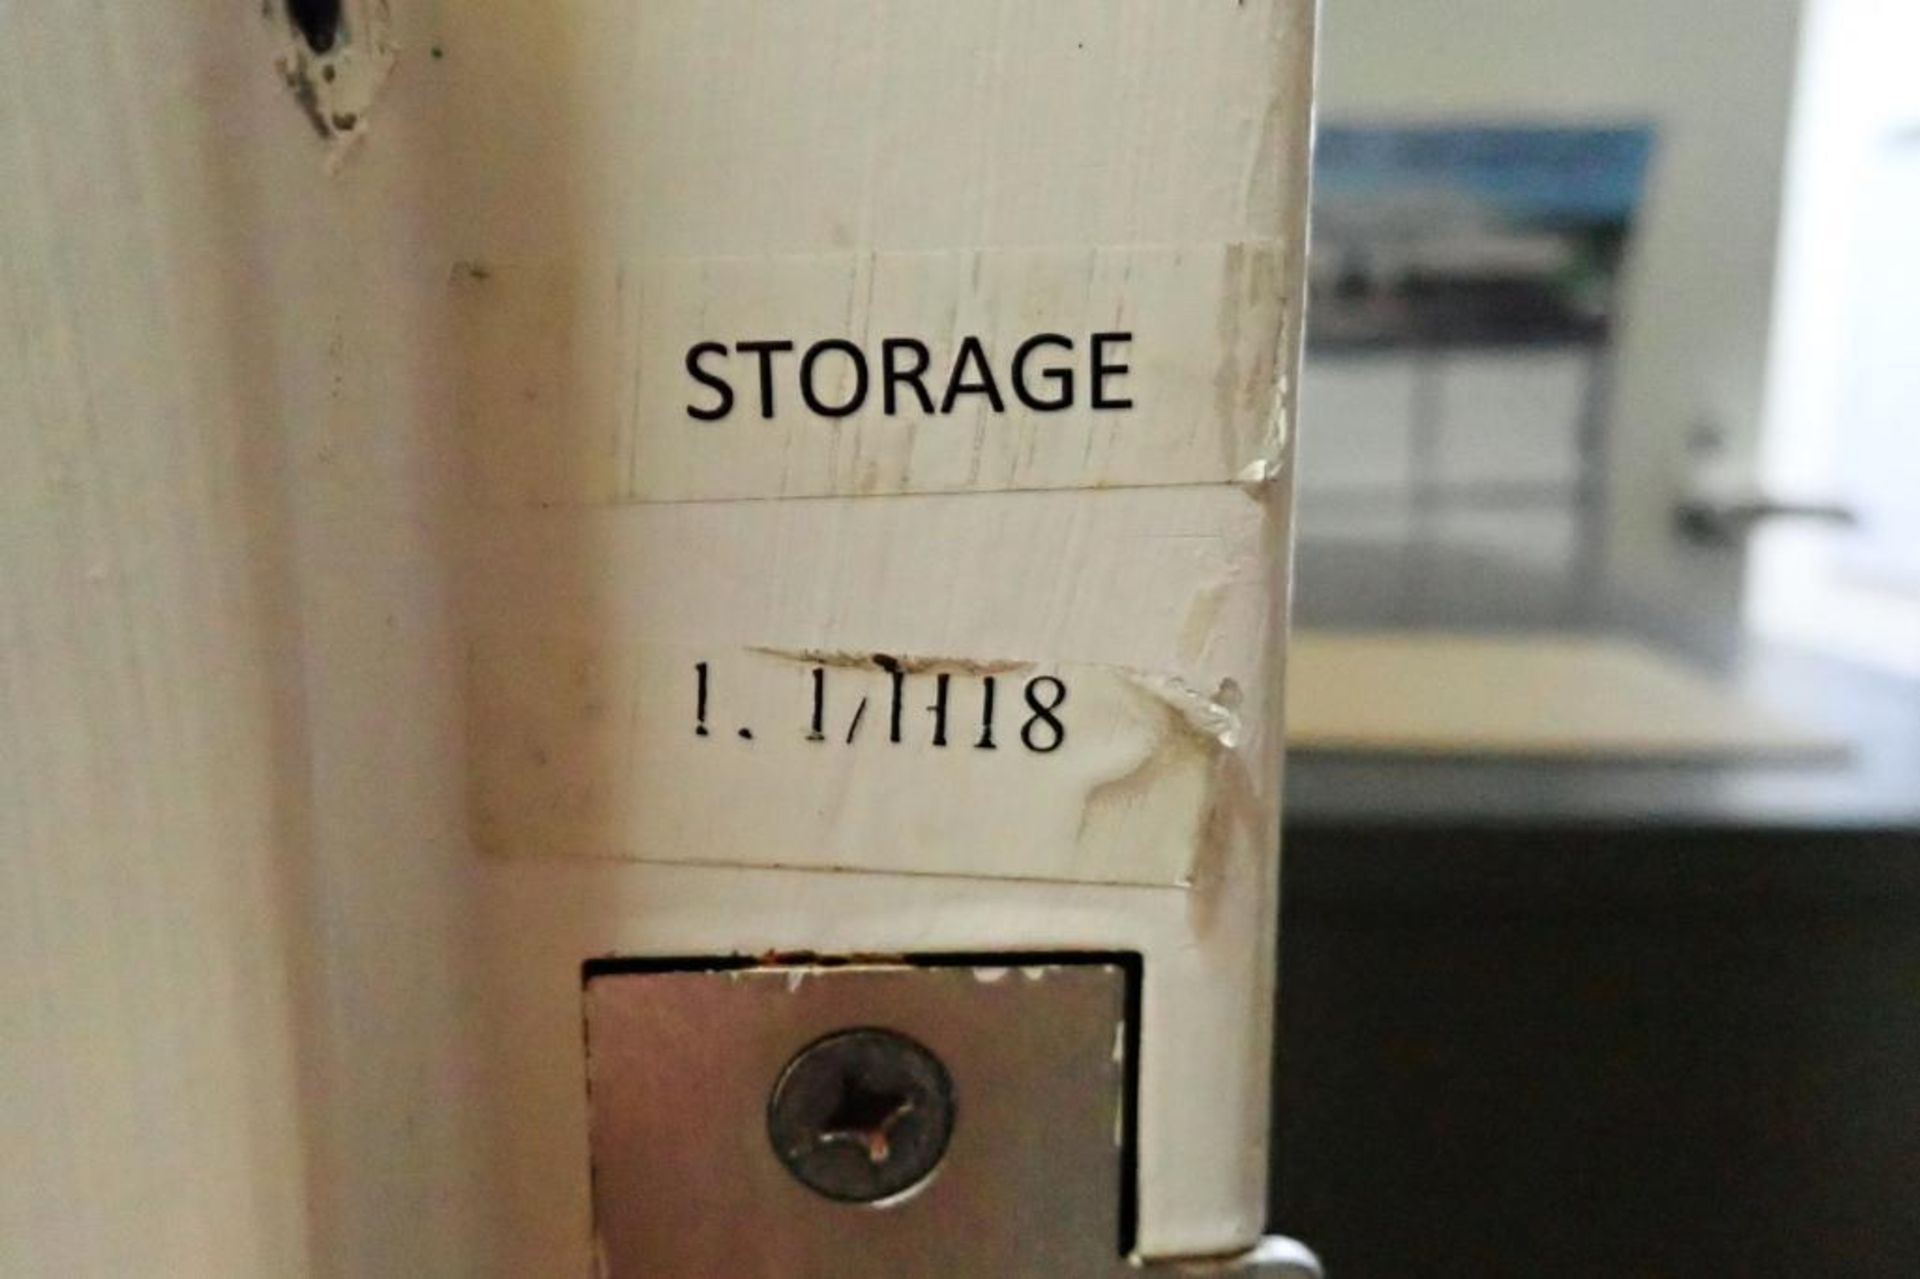 Justrite flammable liquid storage cabinet - Image 4 of 4